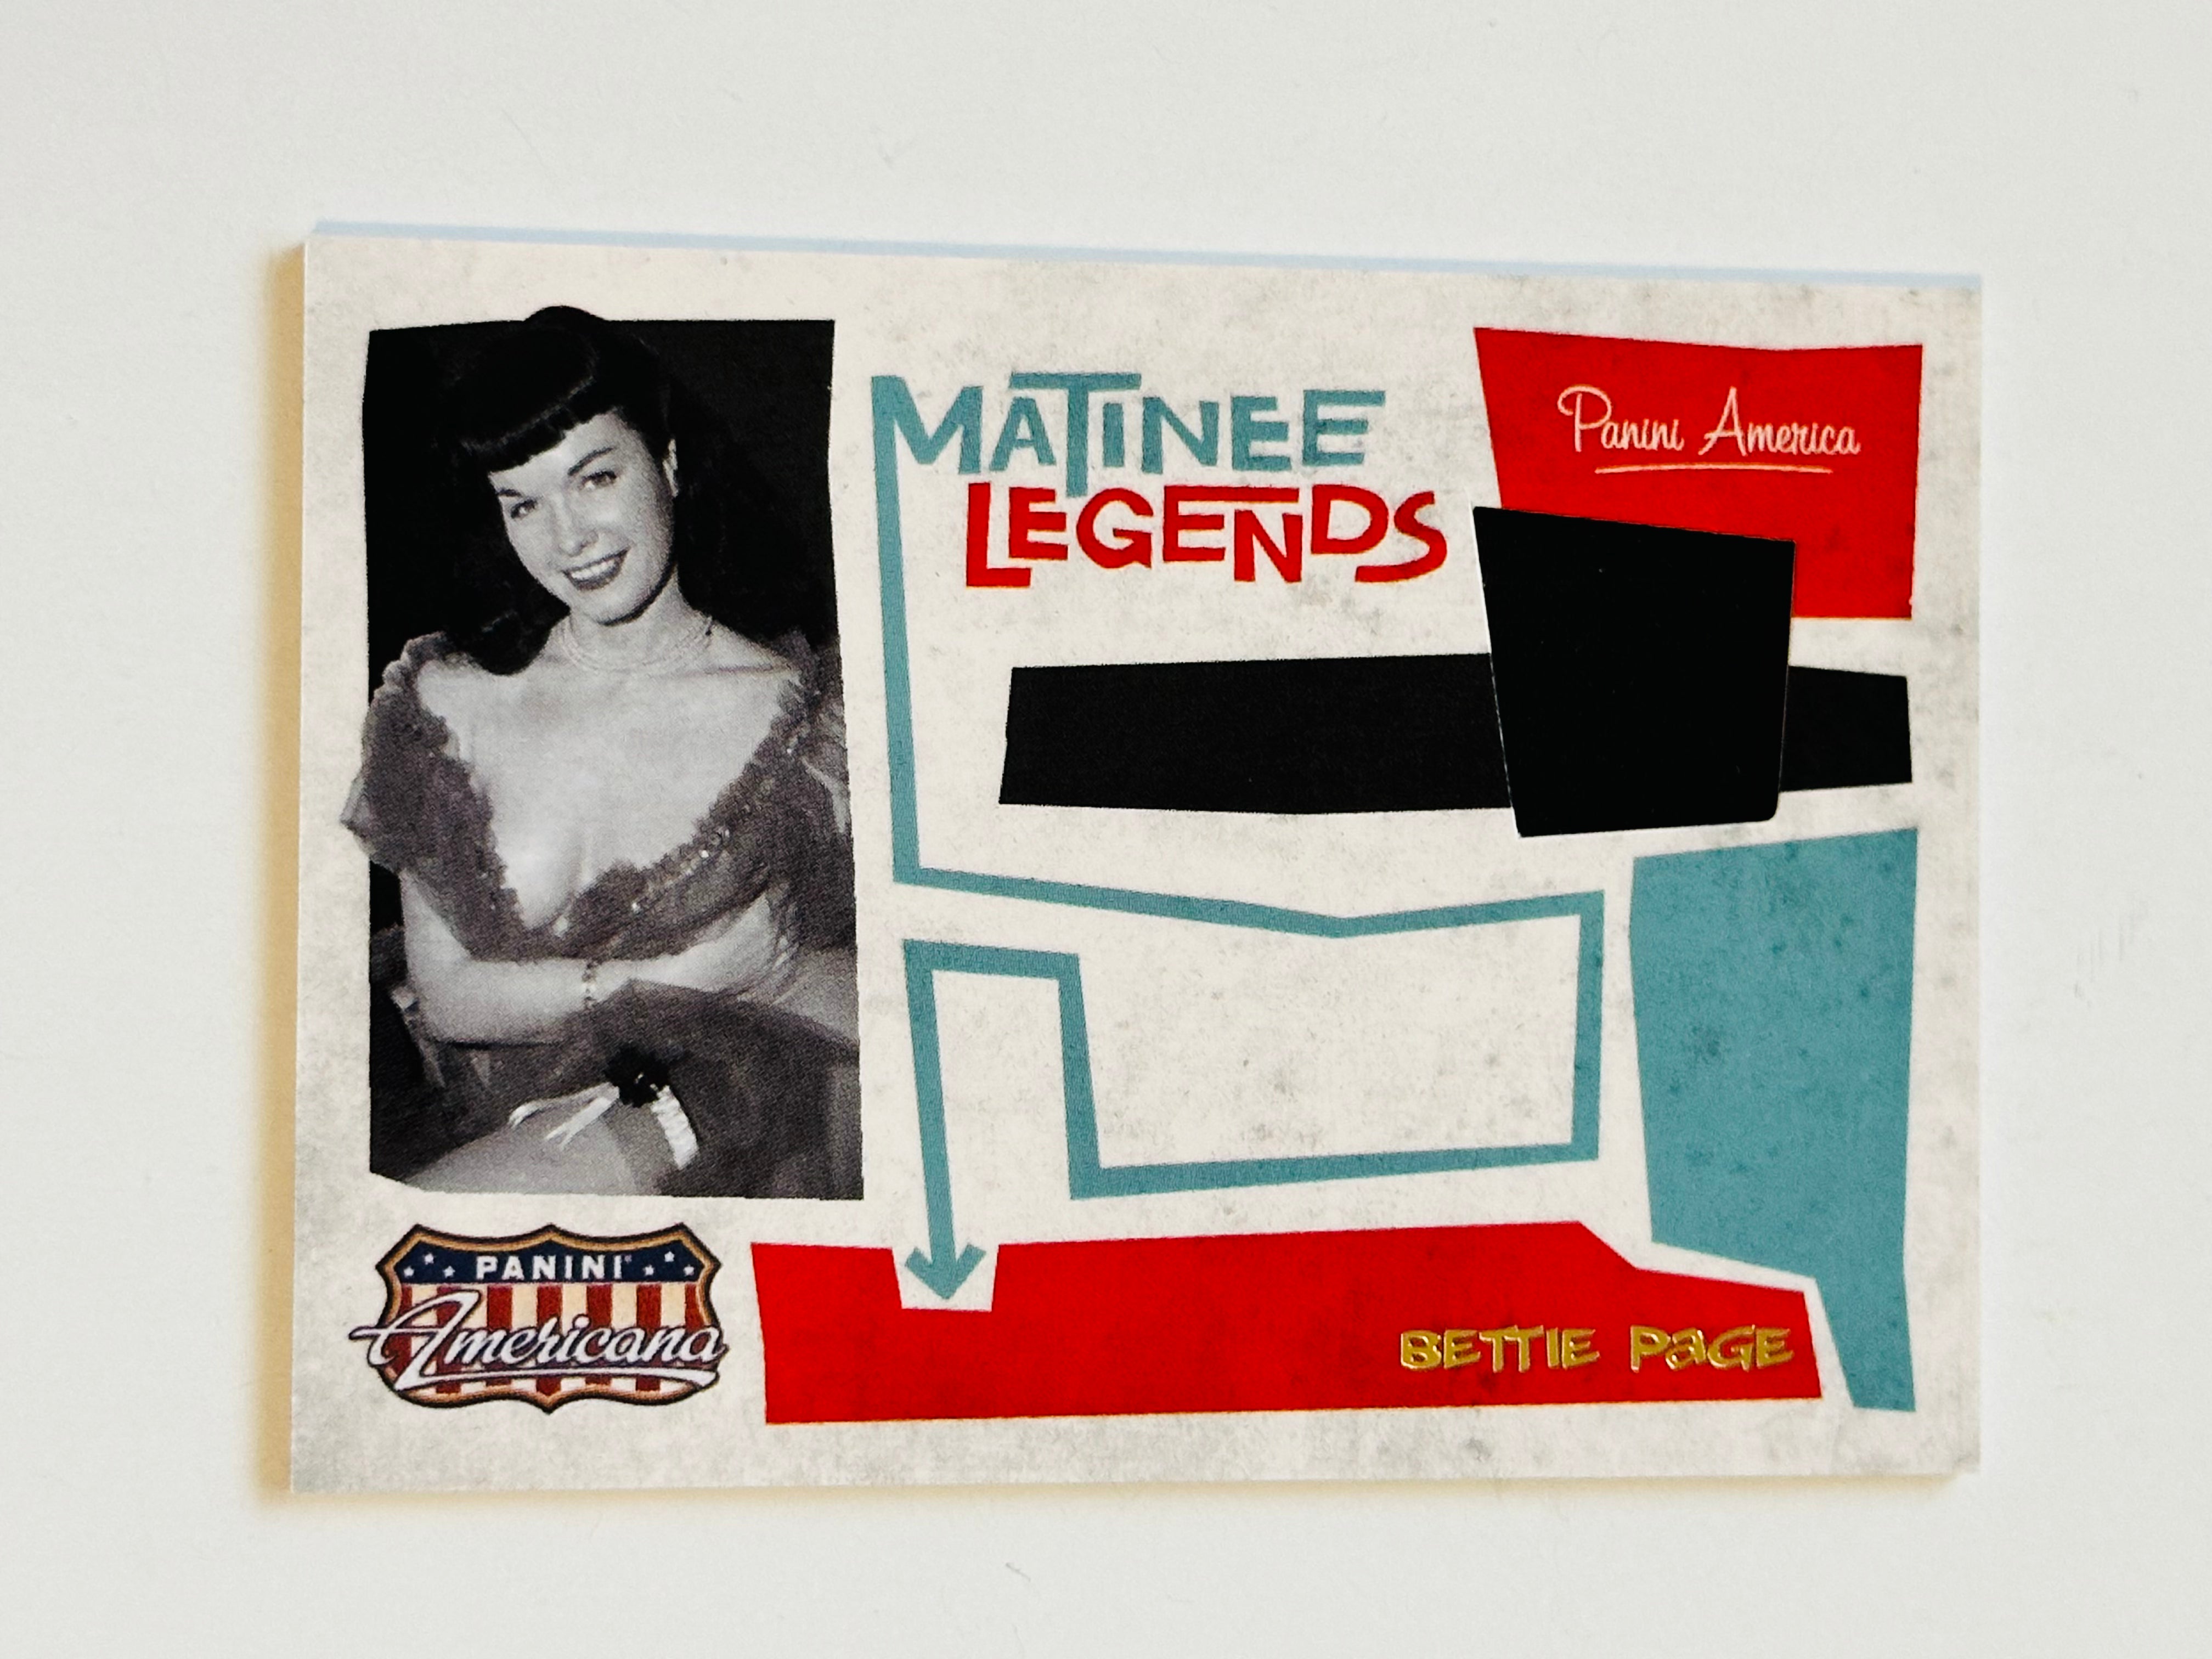 Bettie Page rare numbered memorabilia insert card